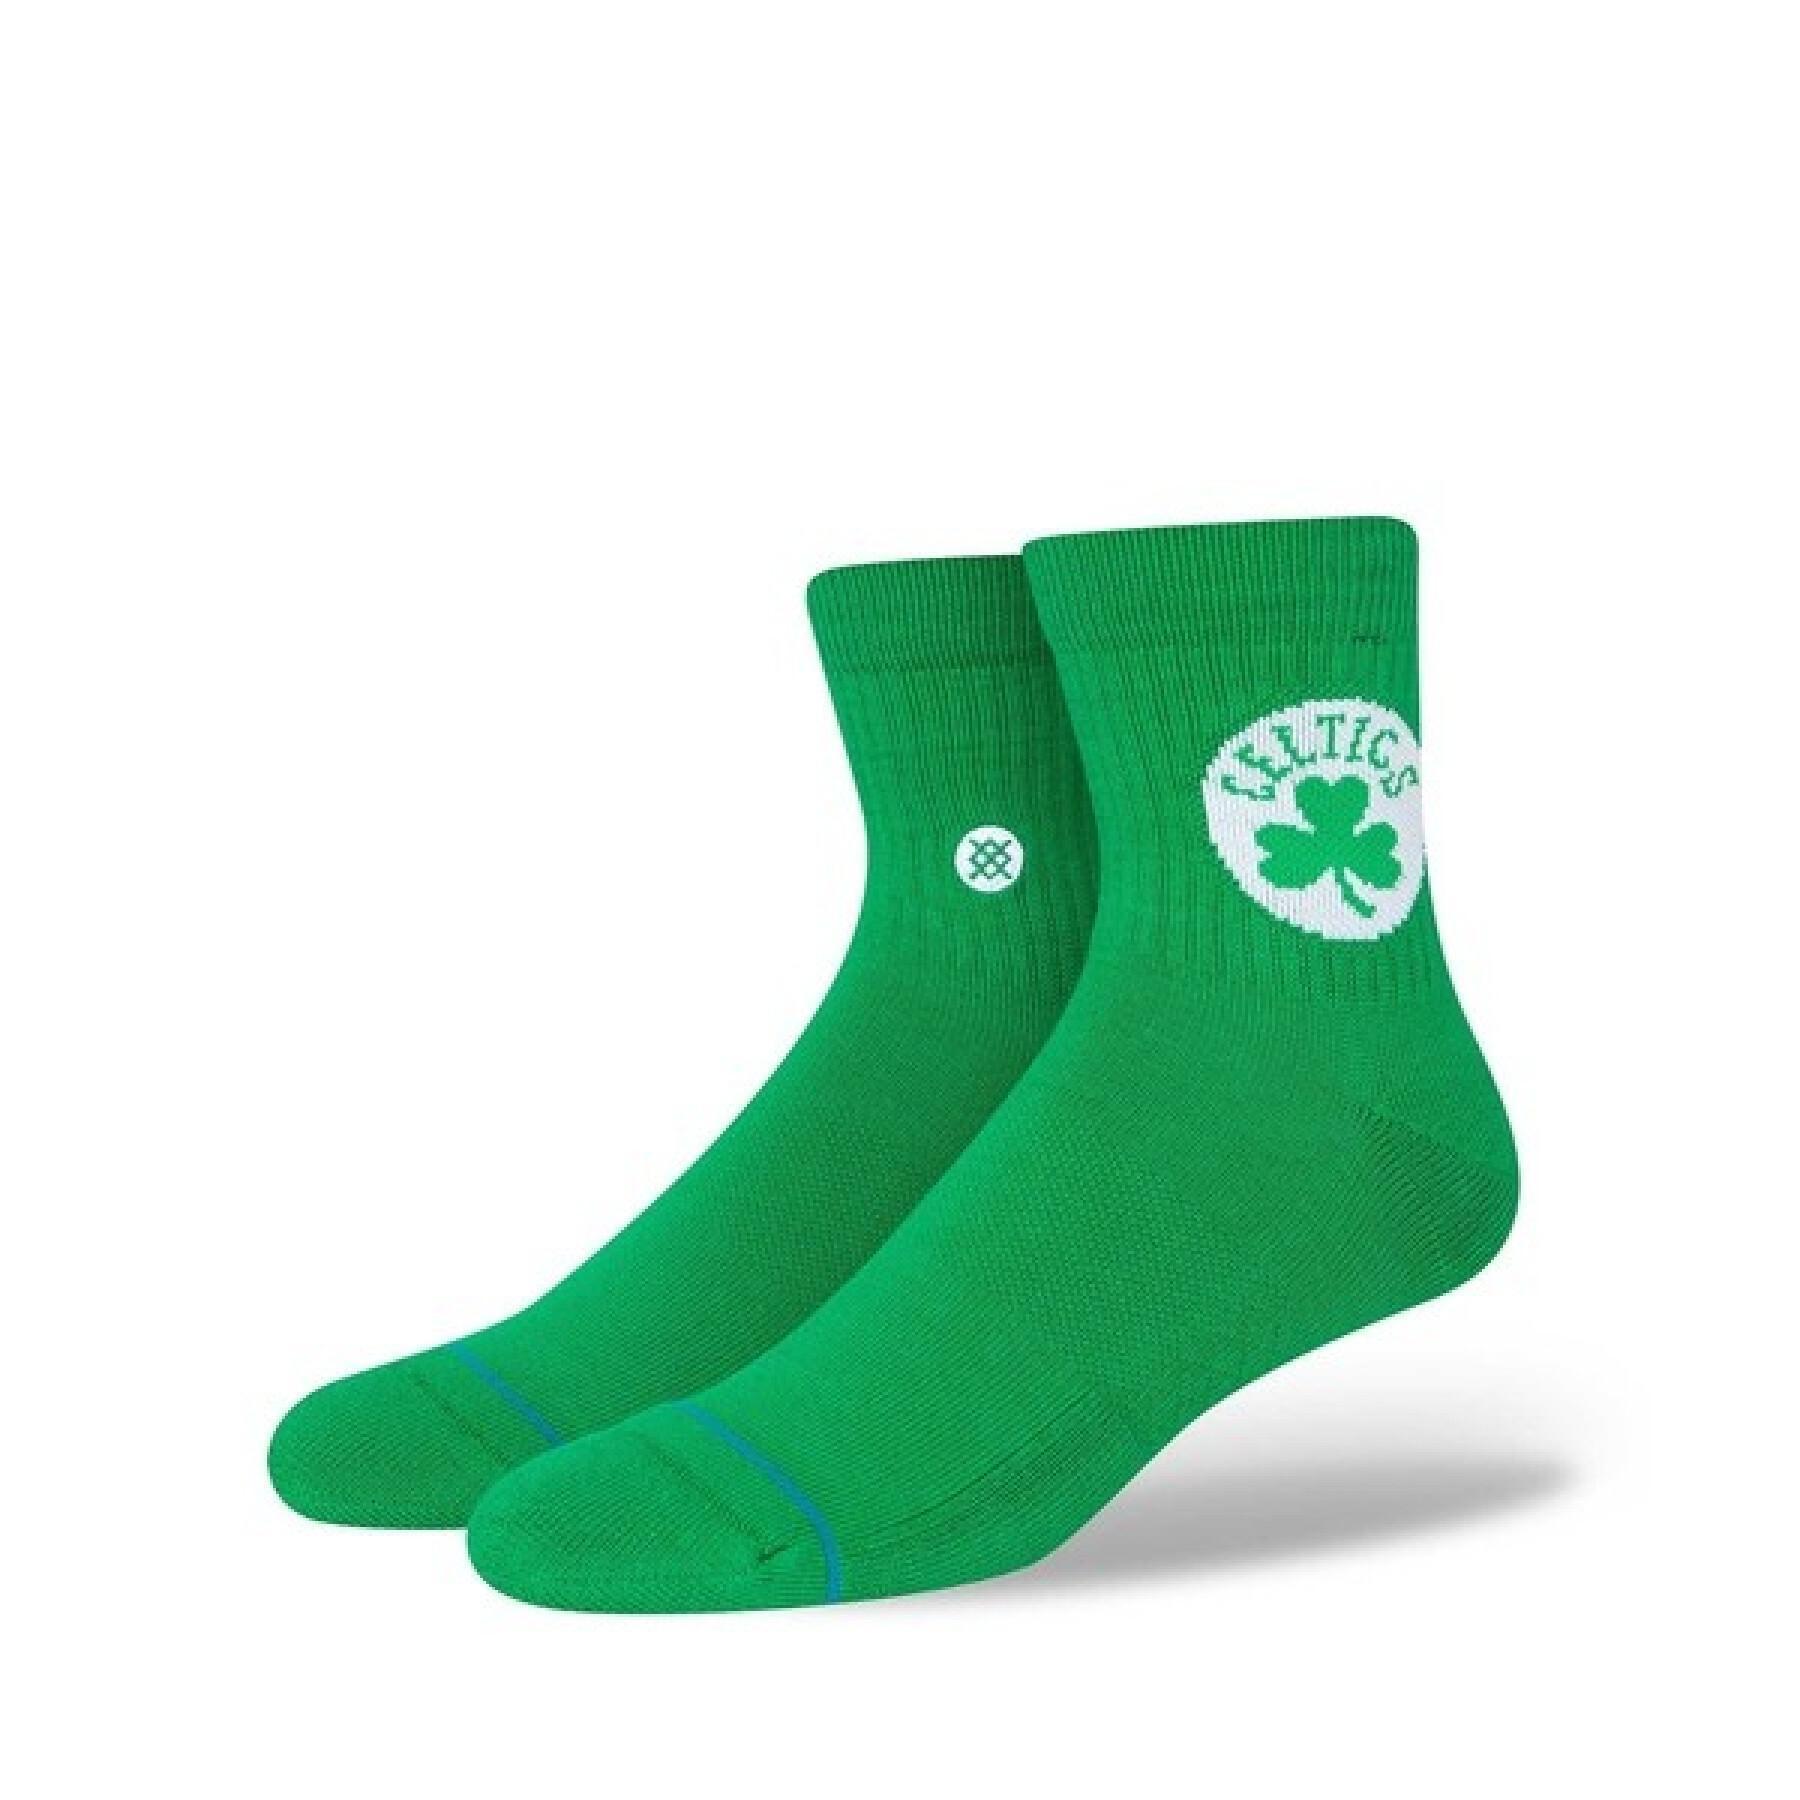 Socken Boston Celtics St Qtr